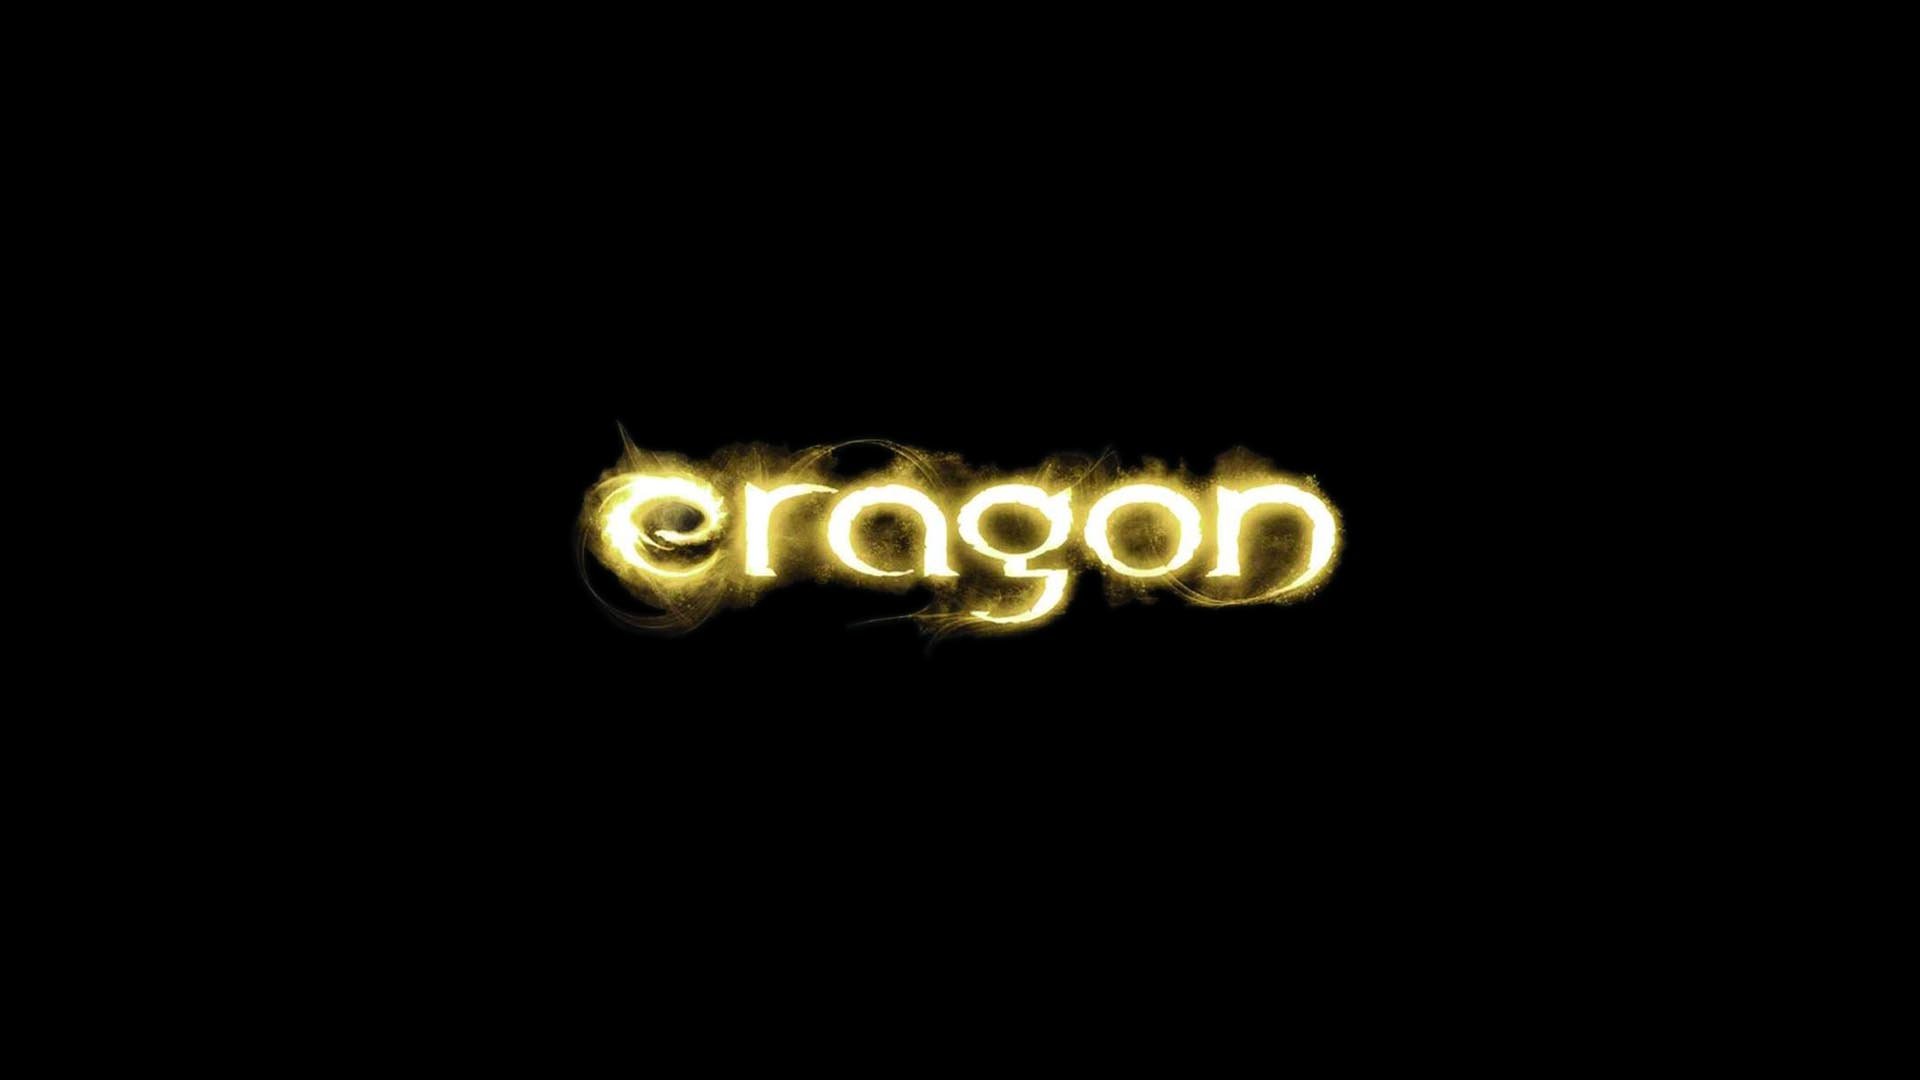 Eragon wallpapers HD for desktop backgrounds